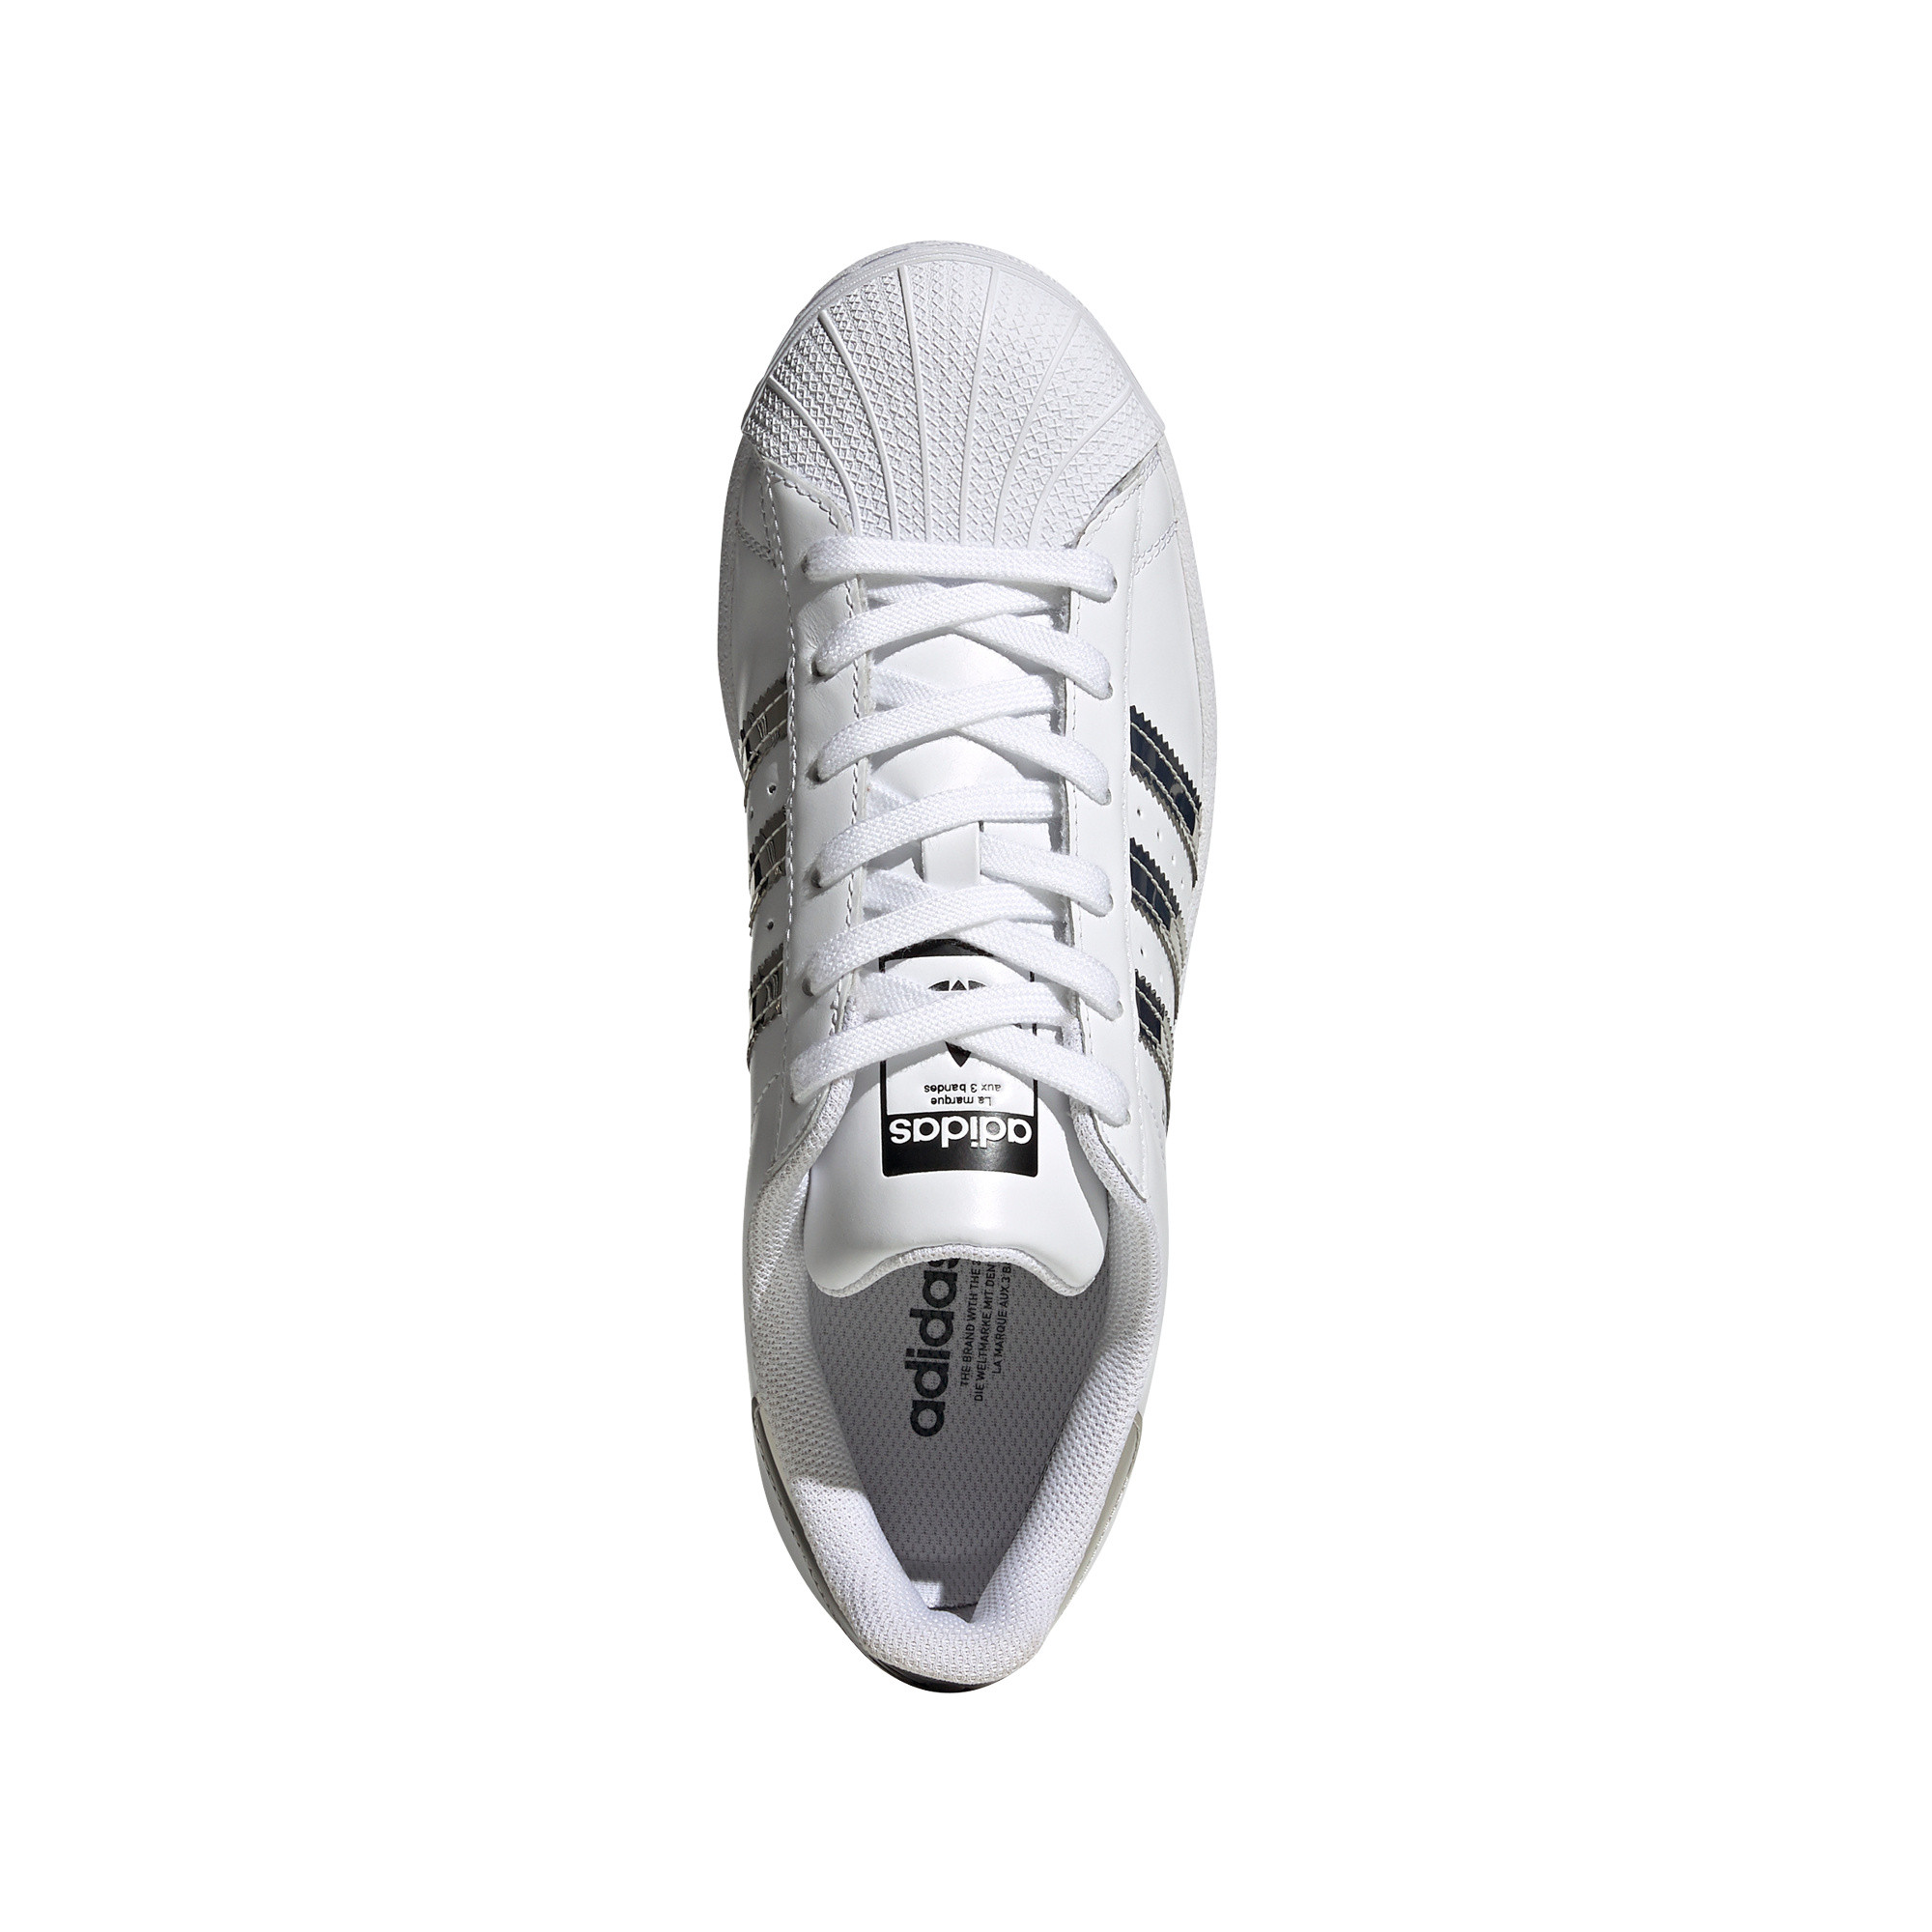 Superstar Shoes, White / Grey, large image number 11